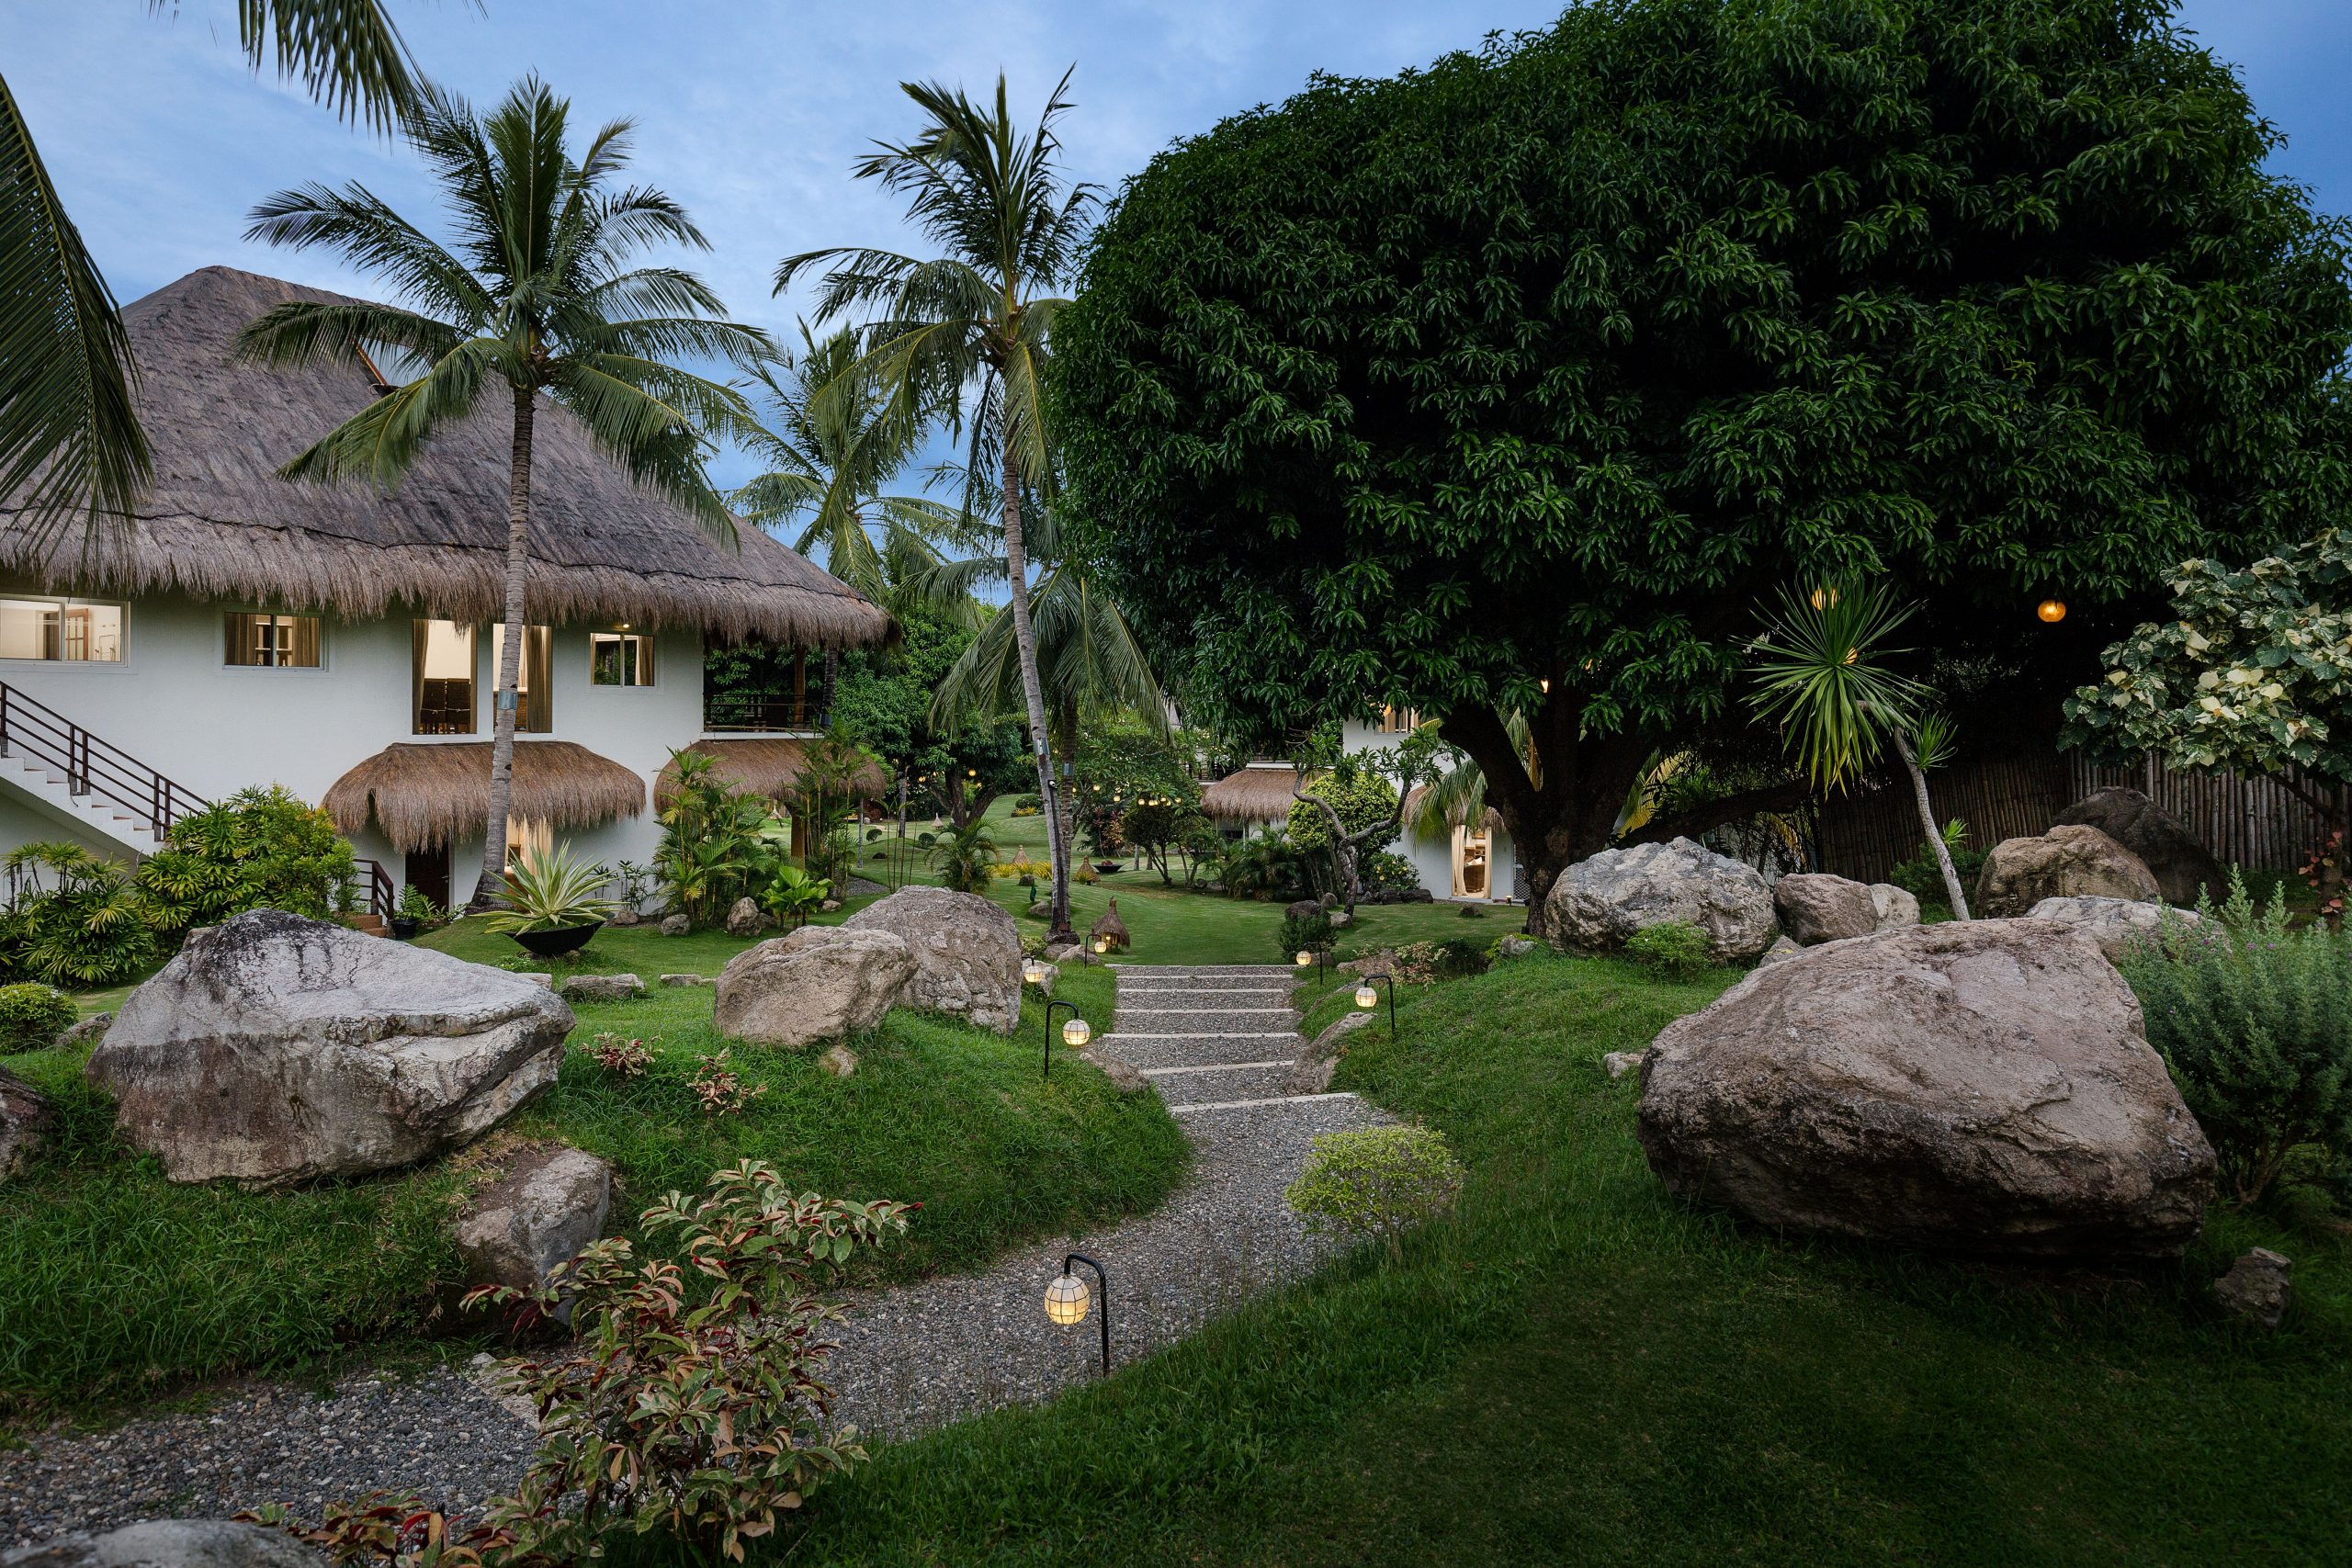 Garden & villa view at Atmosphere Resort & Spa in the Philippines